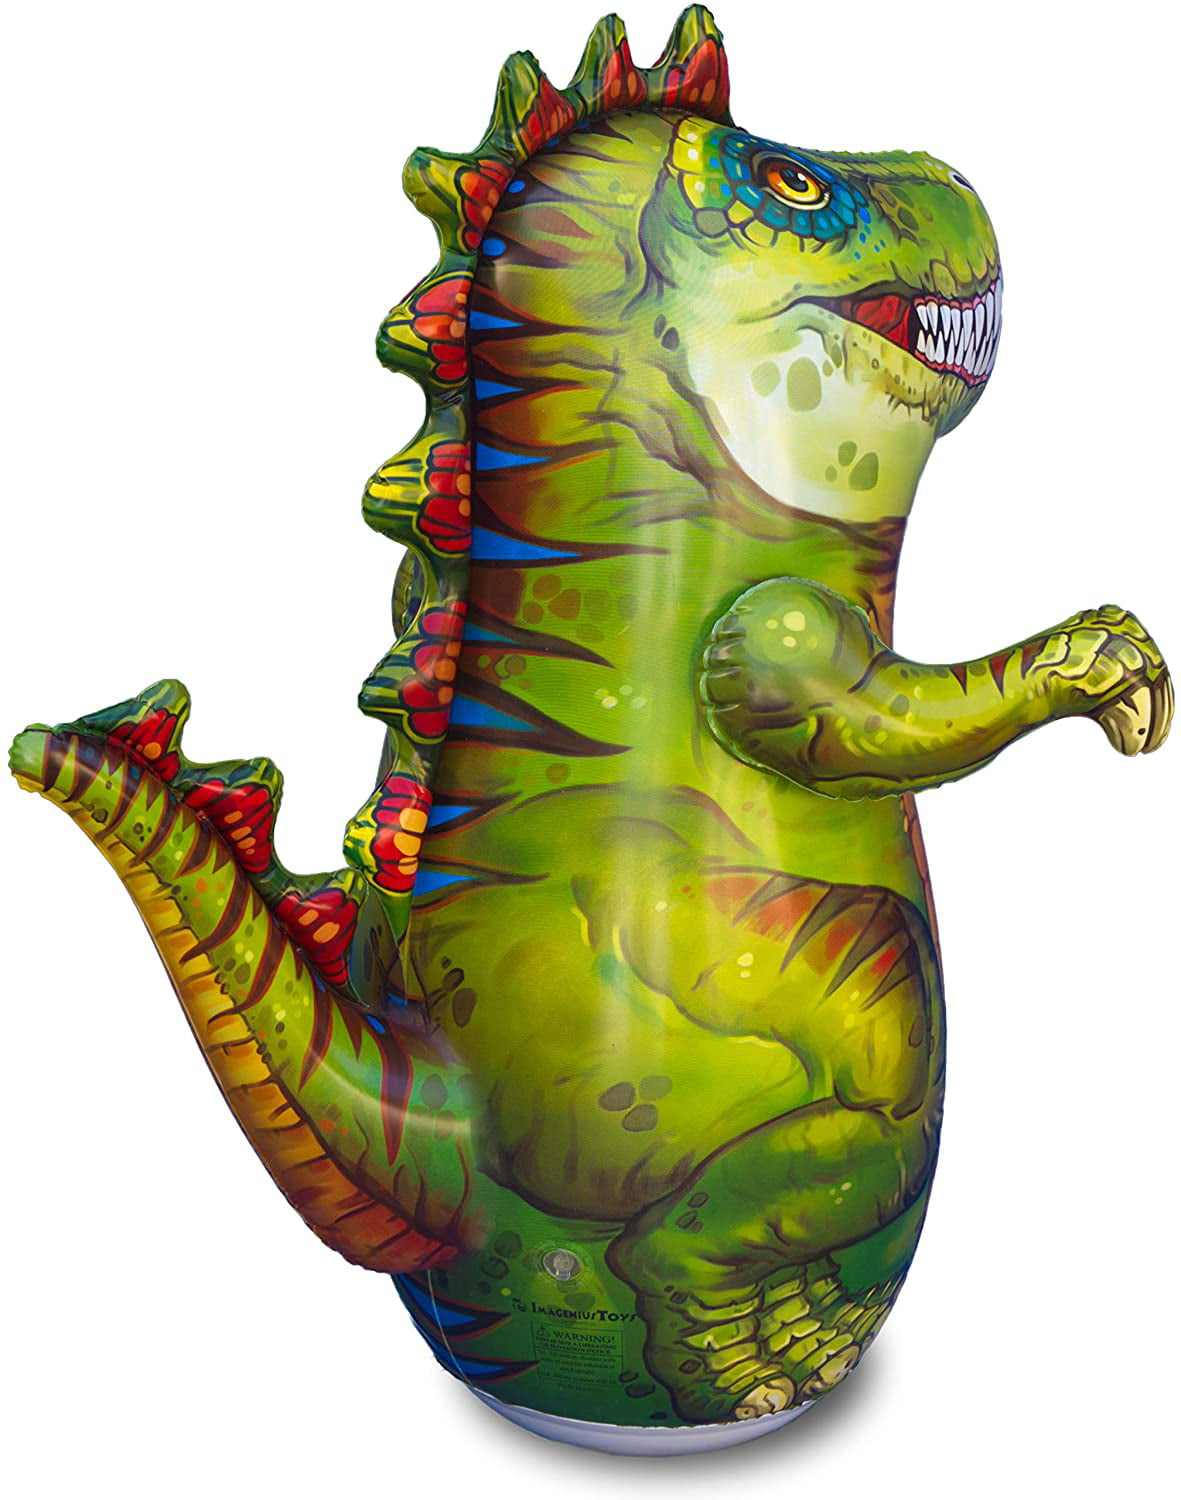 Jurassic World Dinosaurs T-Rex Initiative Punching 36"Bop Bag Novelty Character 